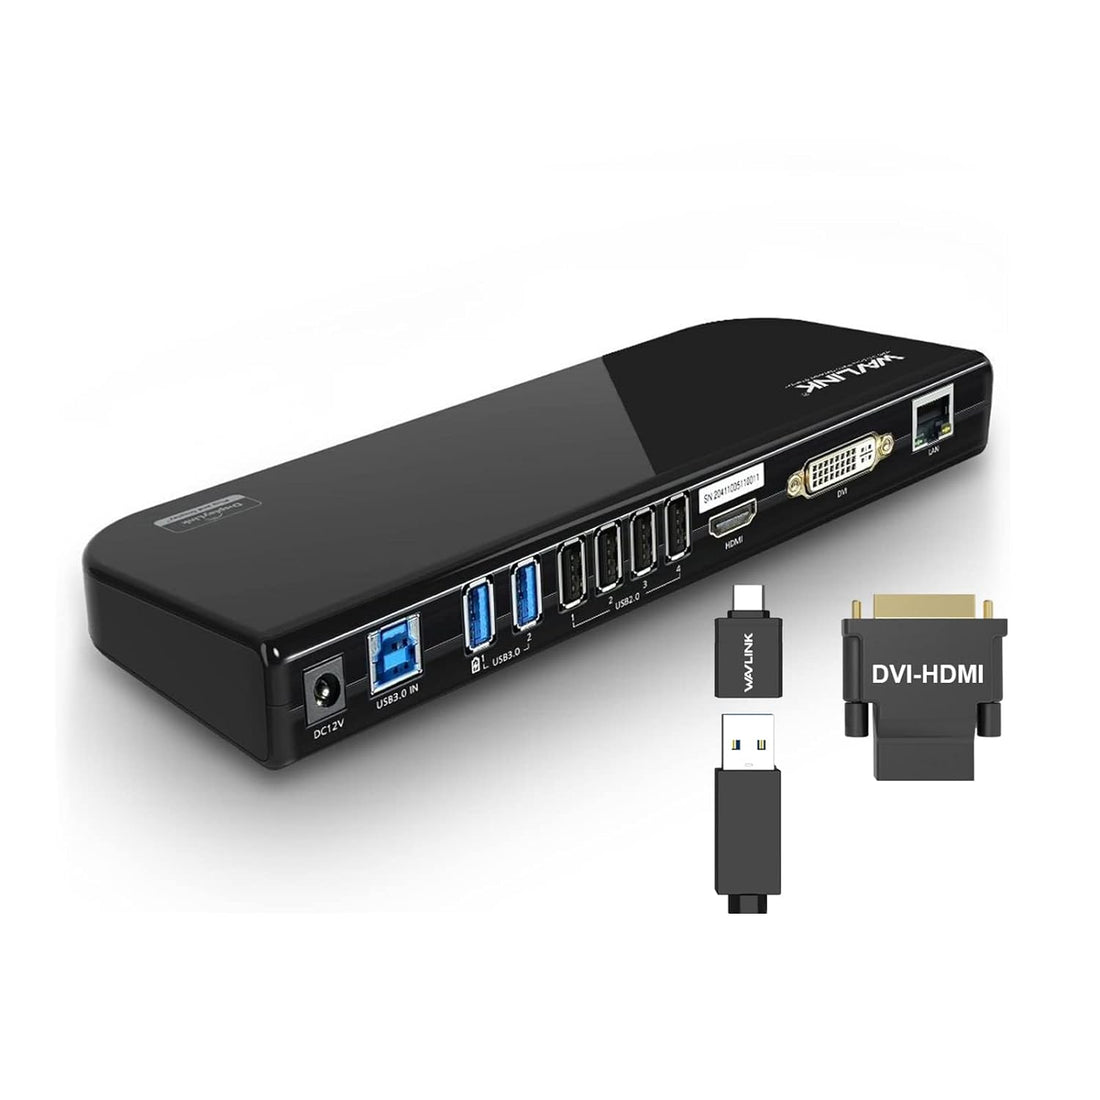 WAVLINK USB 3.0 Universal Laptop Docking Station Dual Video Outputs Support HDMI/DVI/VGA (6 USB Ports,Gigabit Ethernet,Audio)